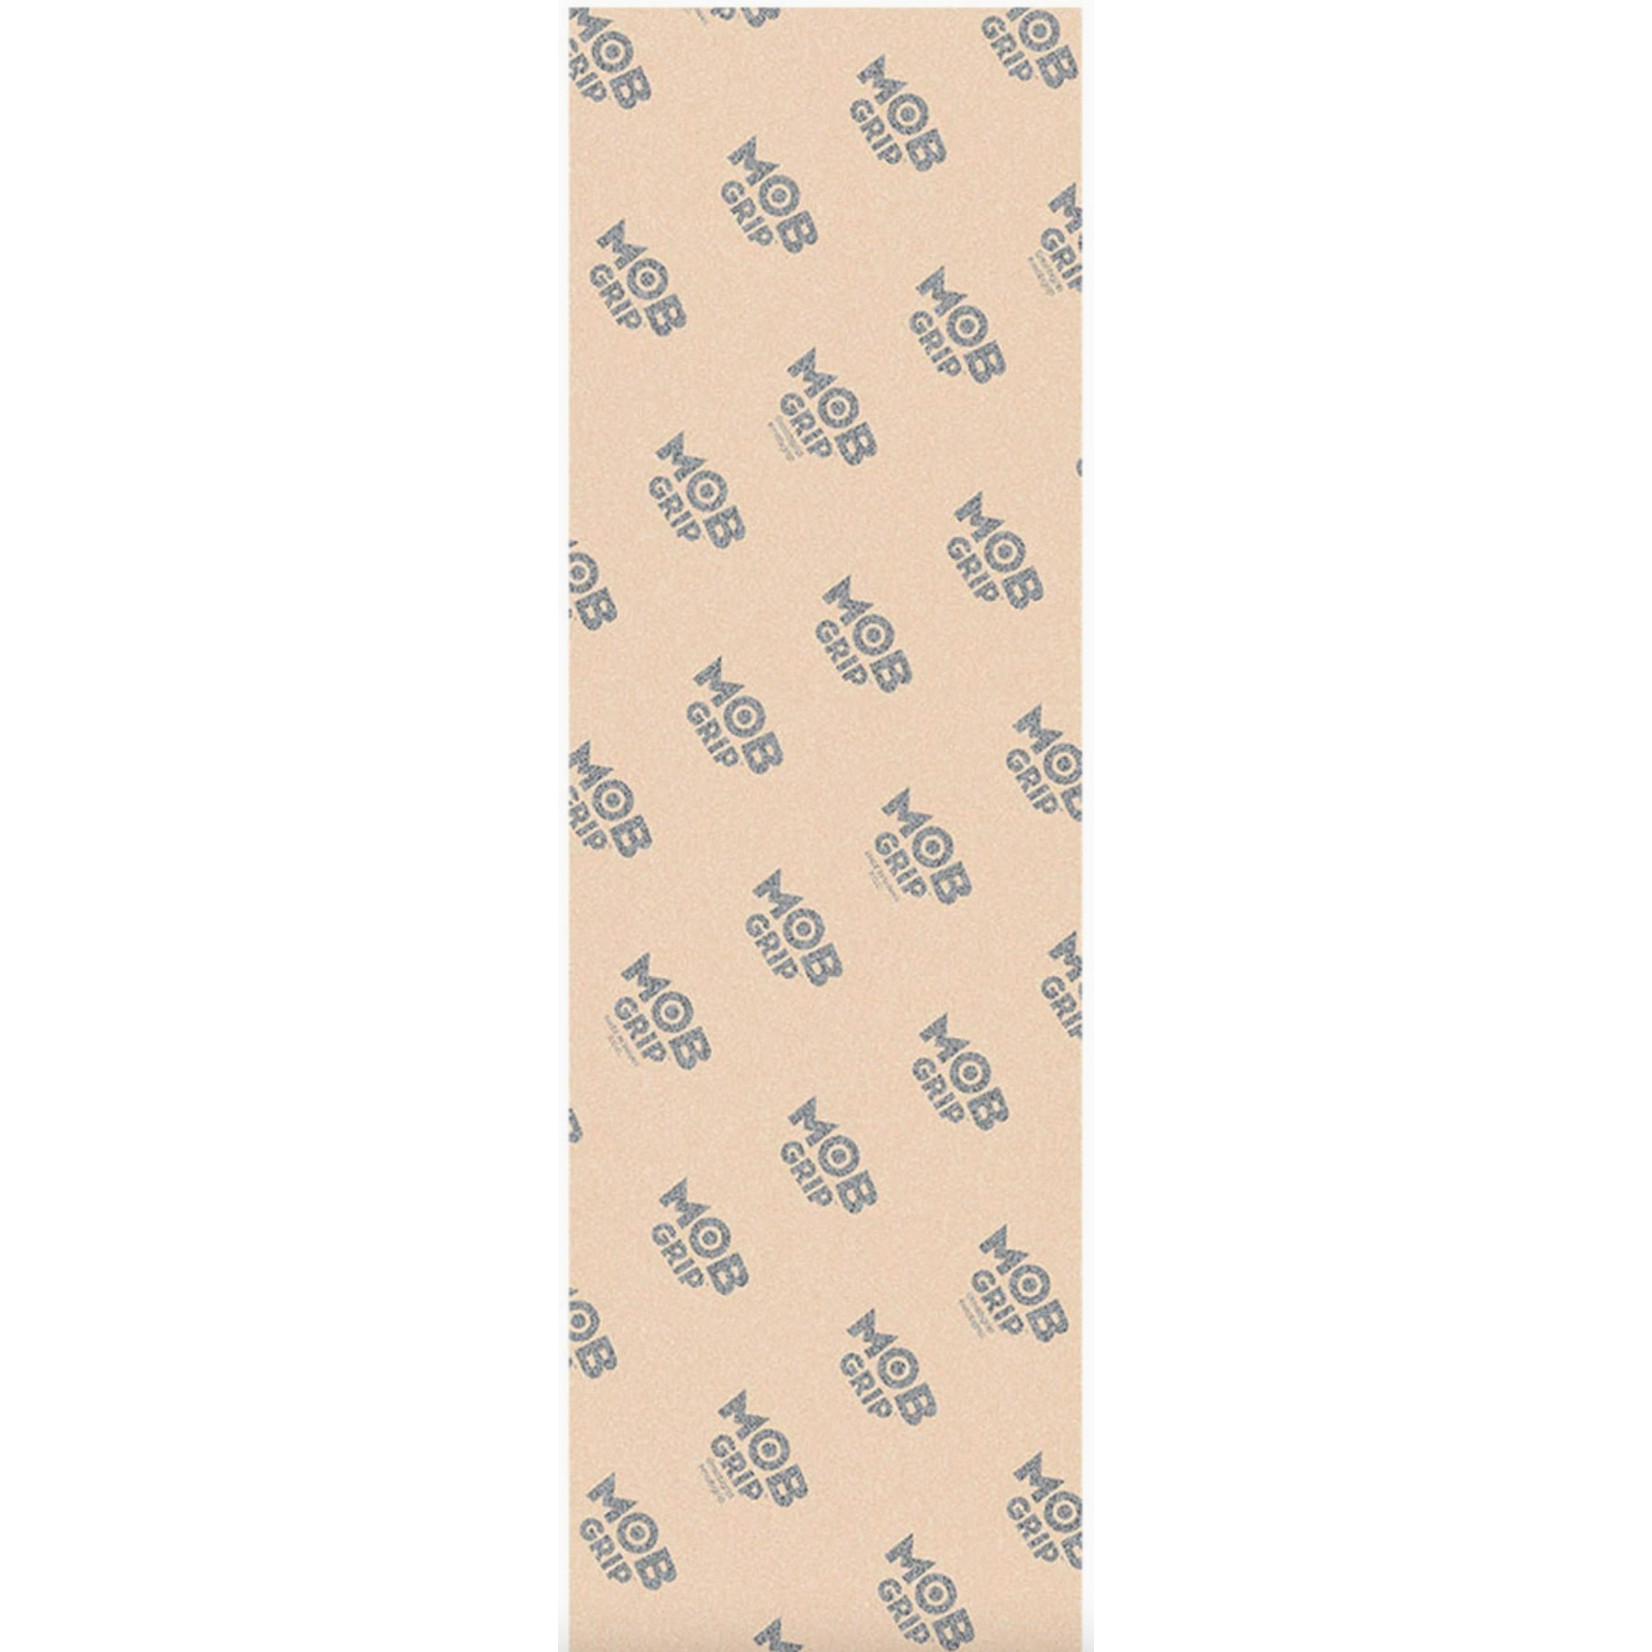 Mob Grip 10” Clear - Single Sheet - Grip Tape